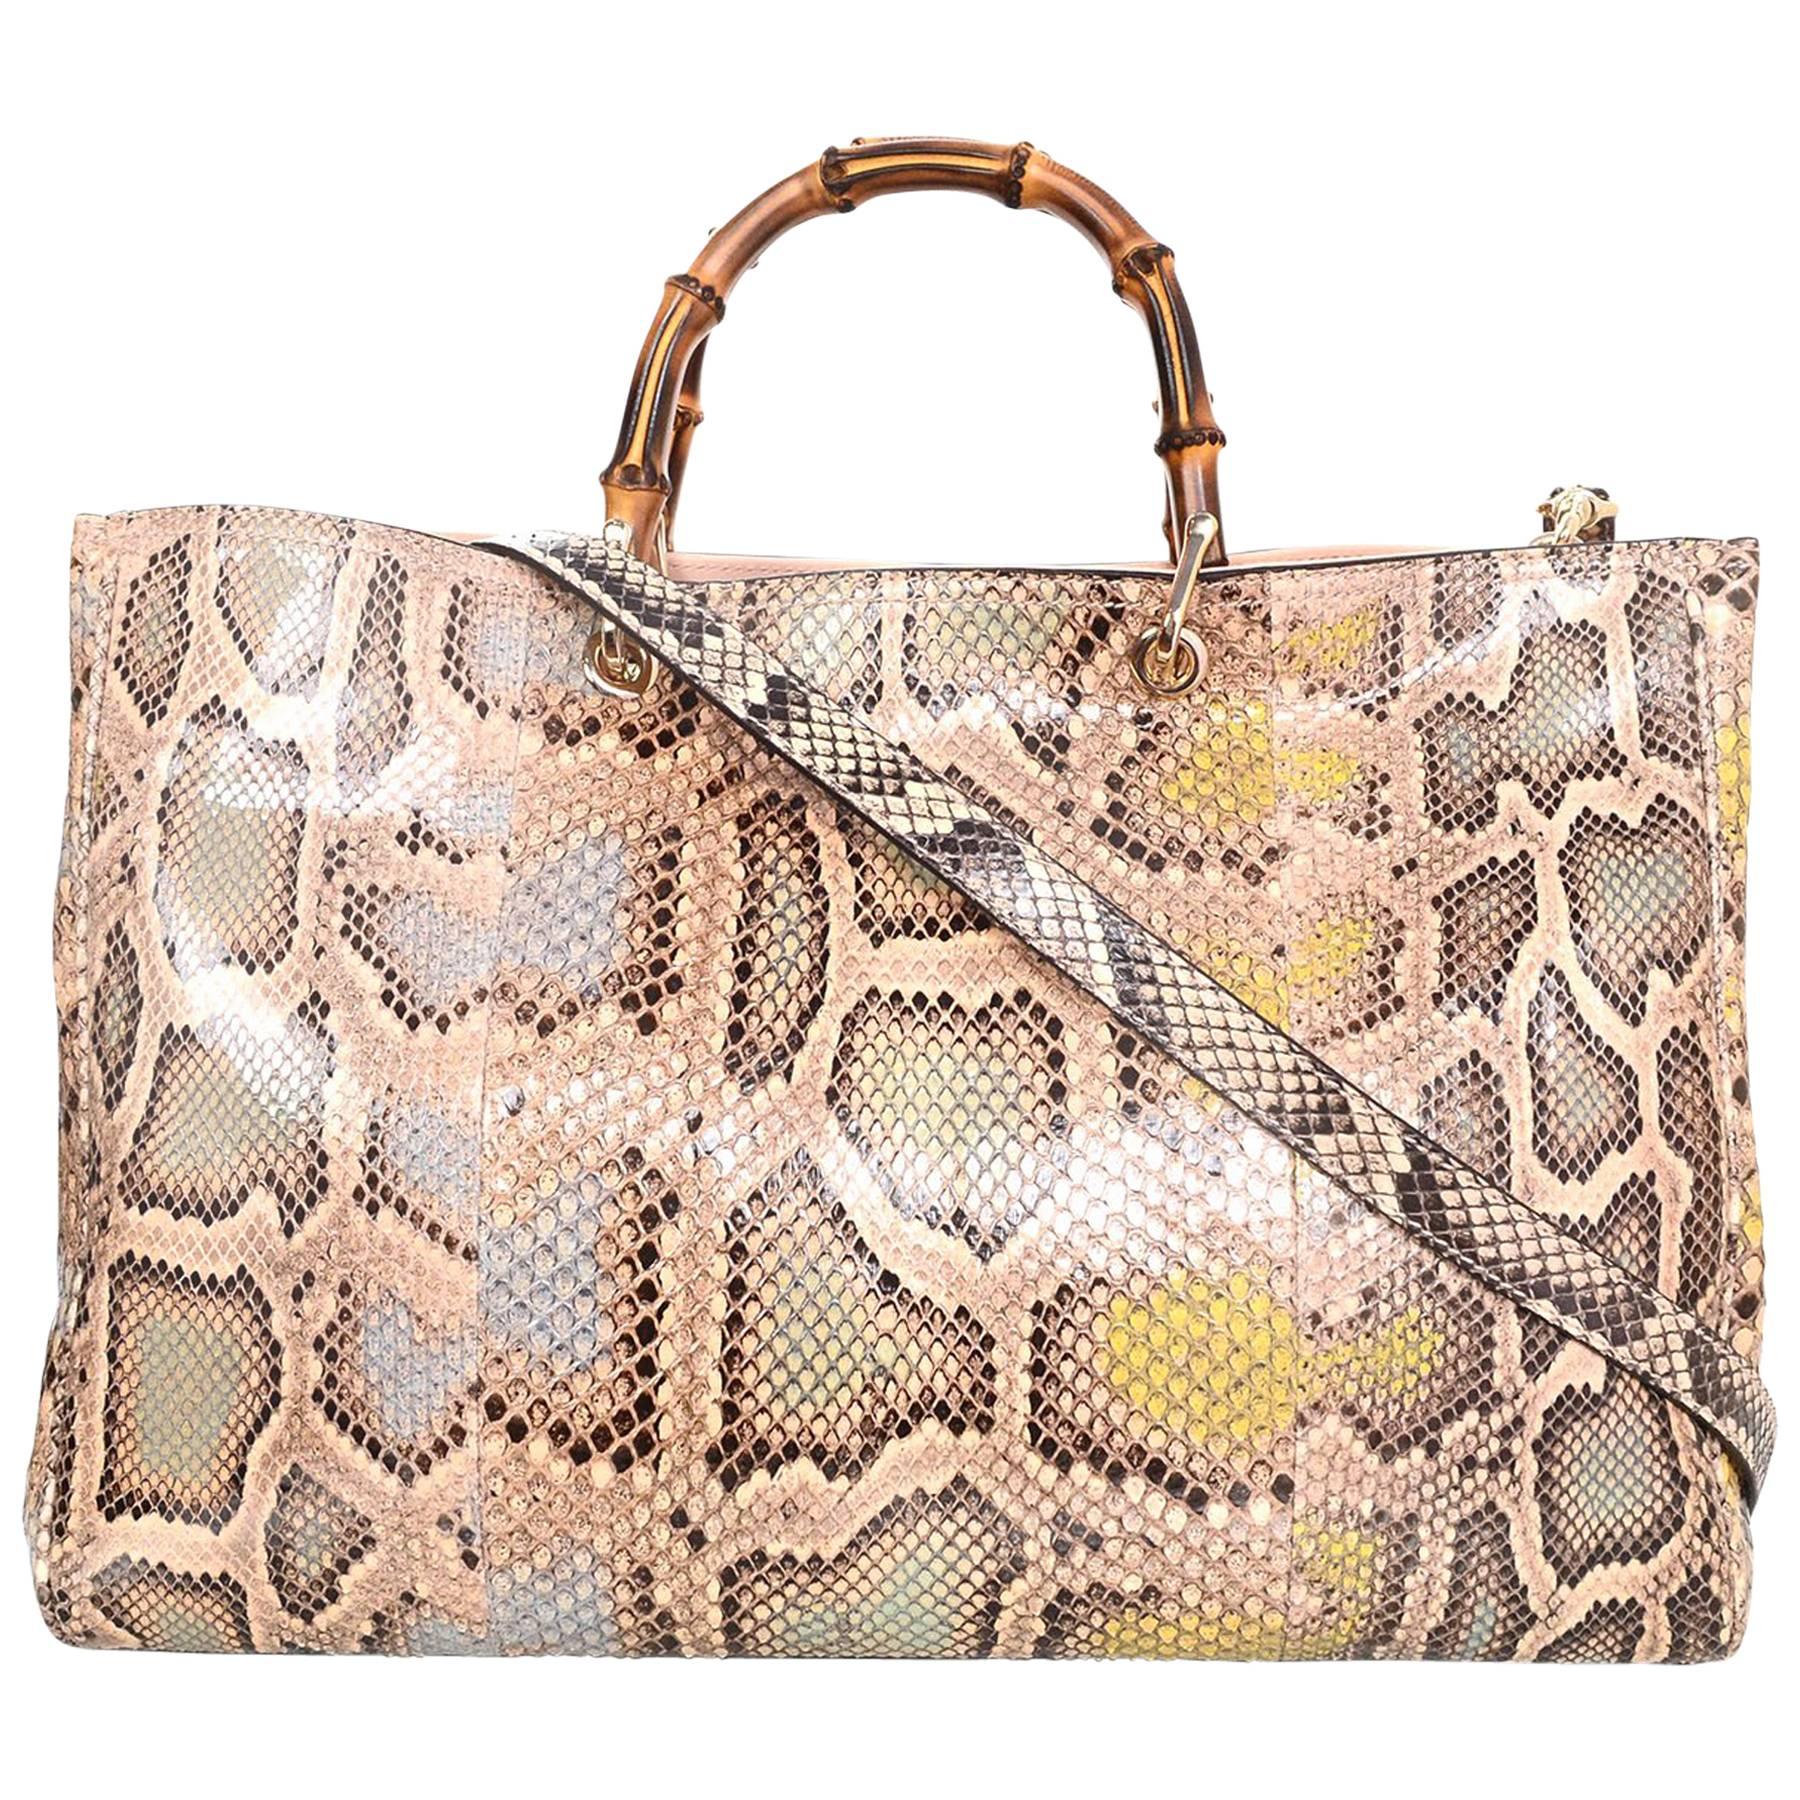 Gucci Blush Python Large Shopper Tote Bag w. Bamboo Handles rt. $3, 800 